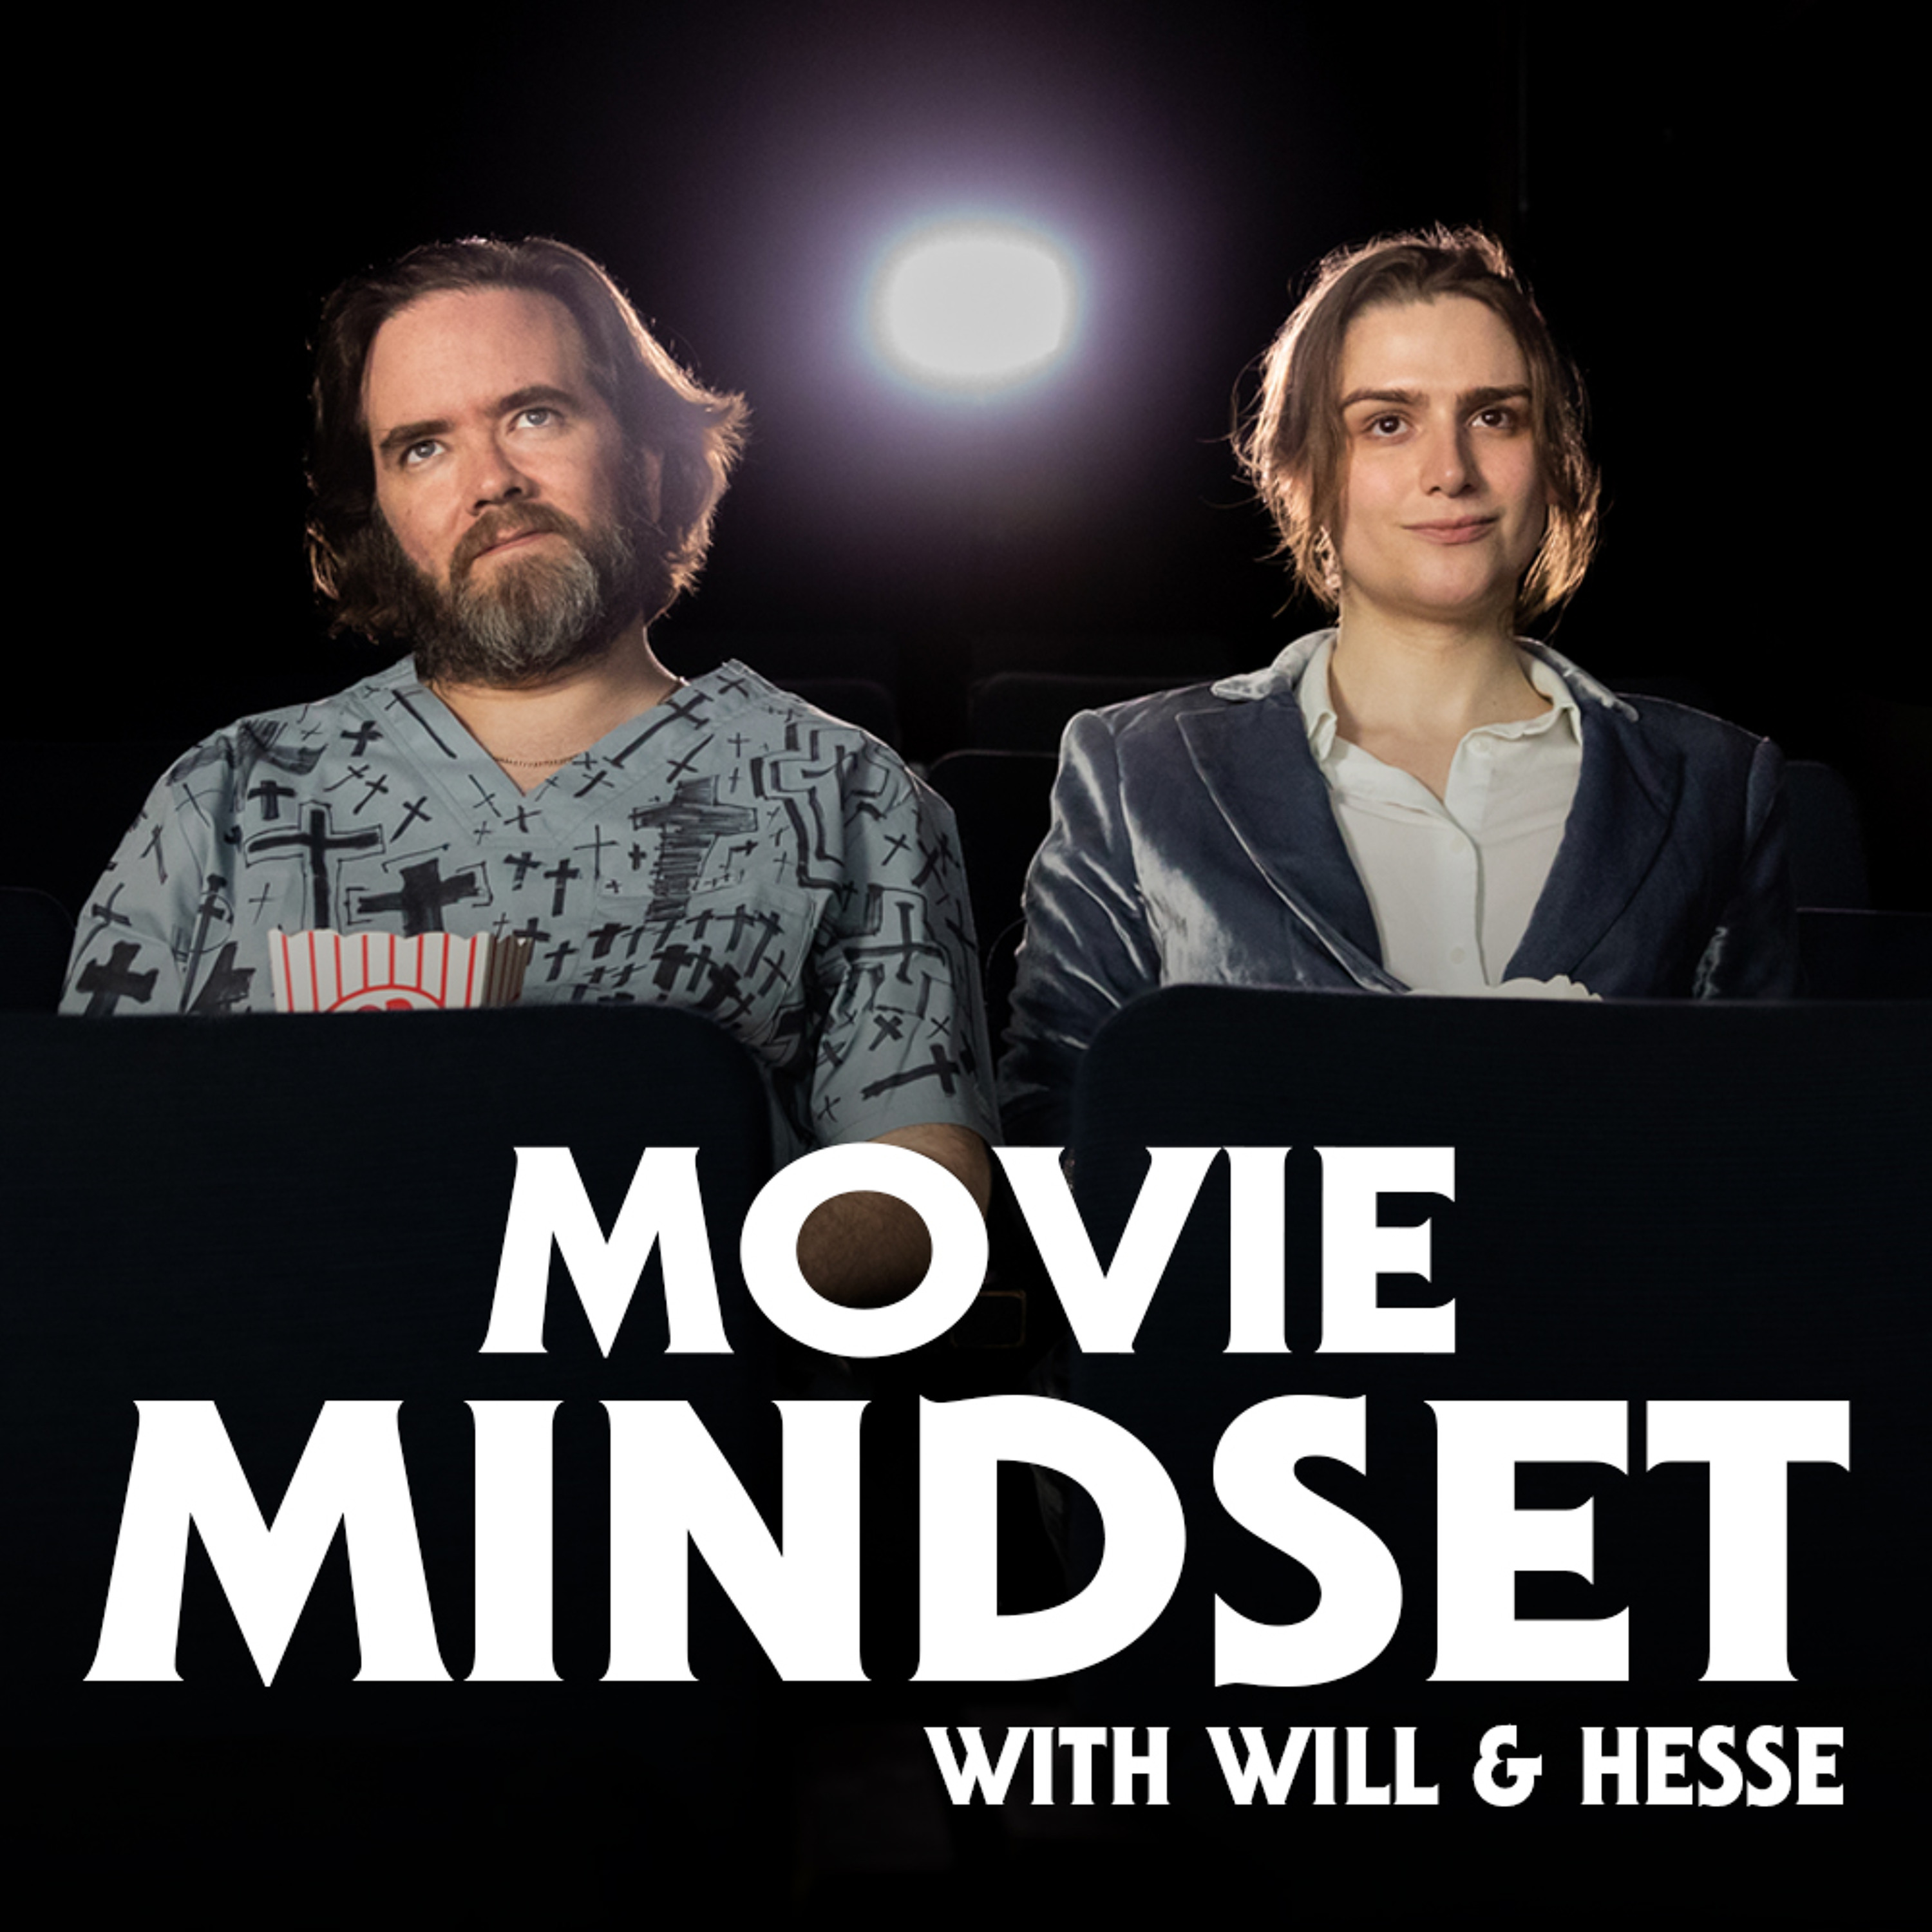 Movie Mindset 06 Teaser - Clint Eastwood's Sudden Impact